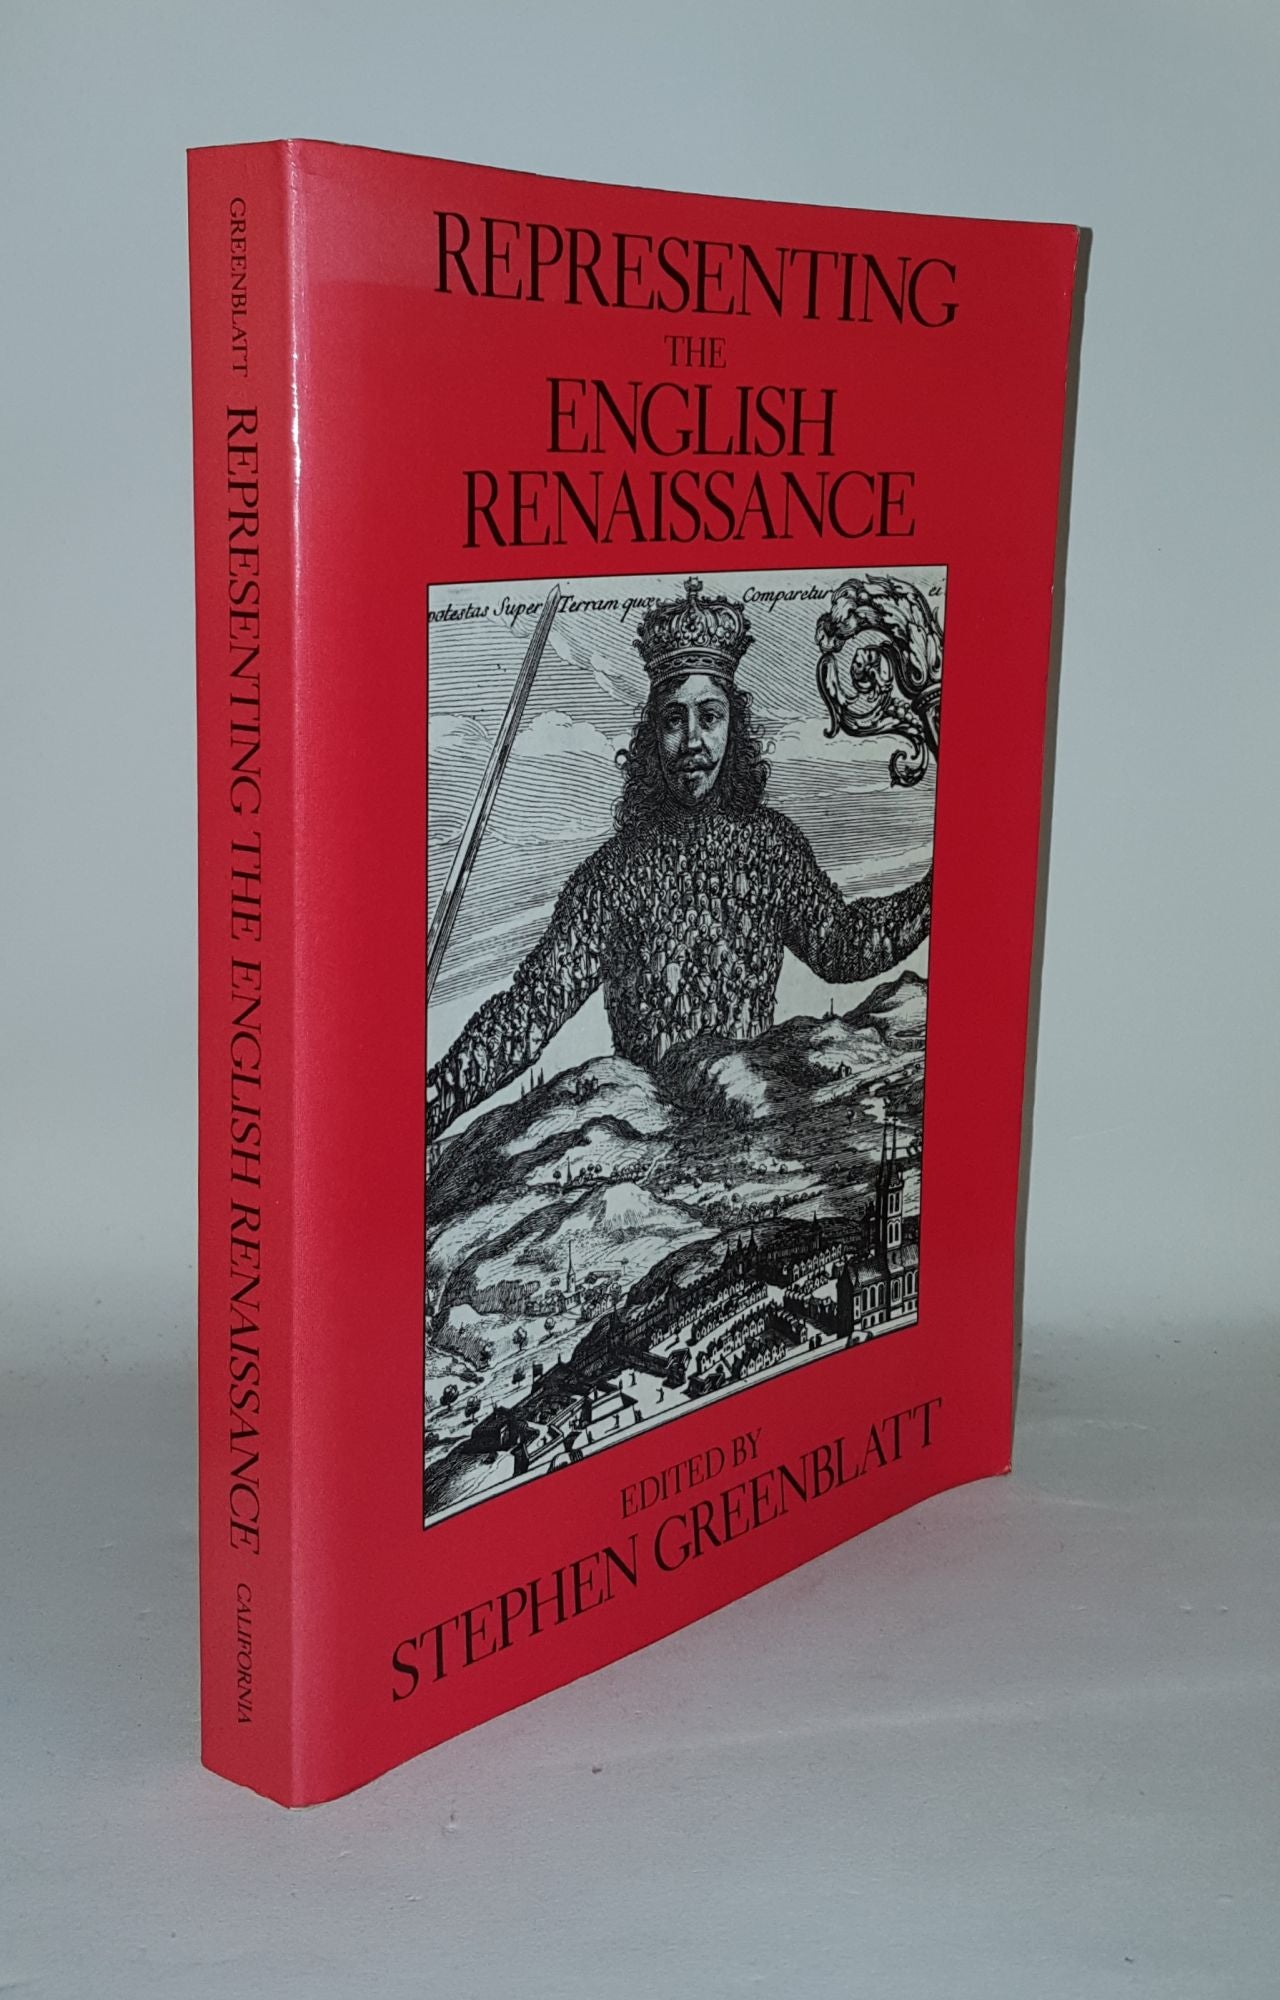 GREENBLATT Stephen - Representing the English Renaissance